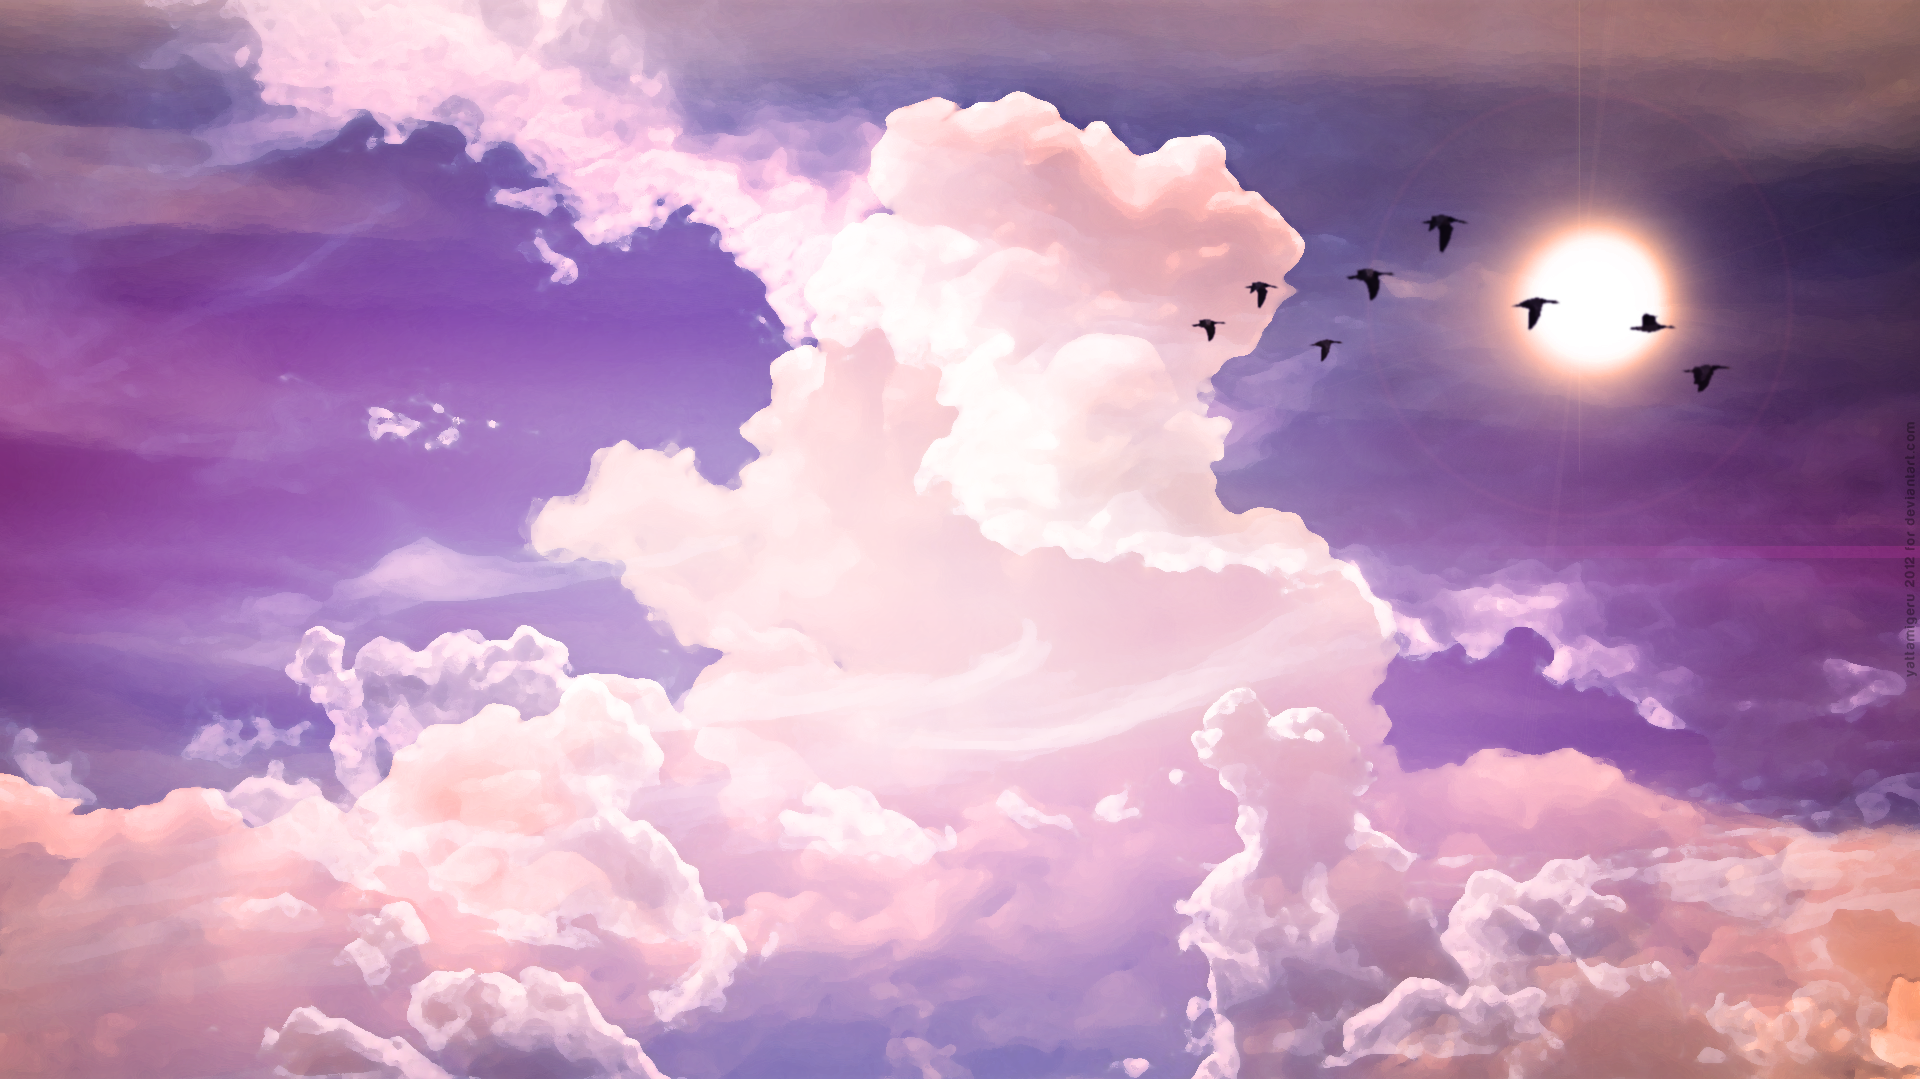 Birds Flying In The Sky Aesthetic Background